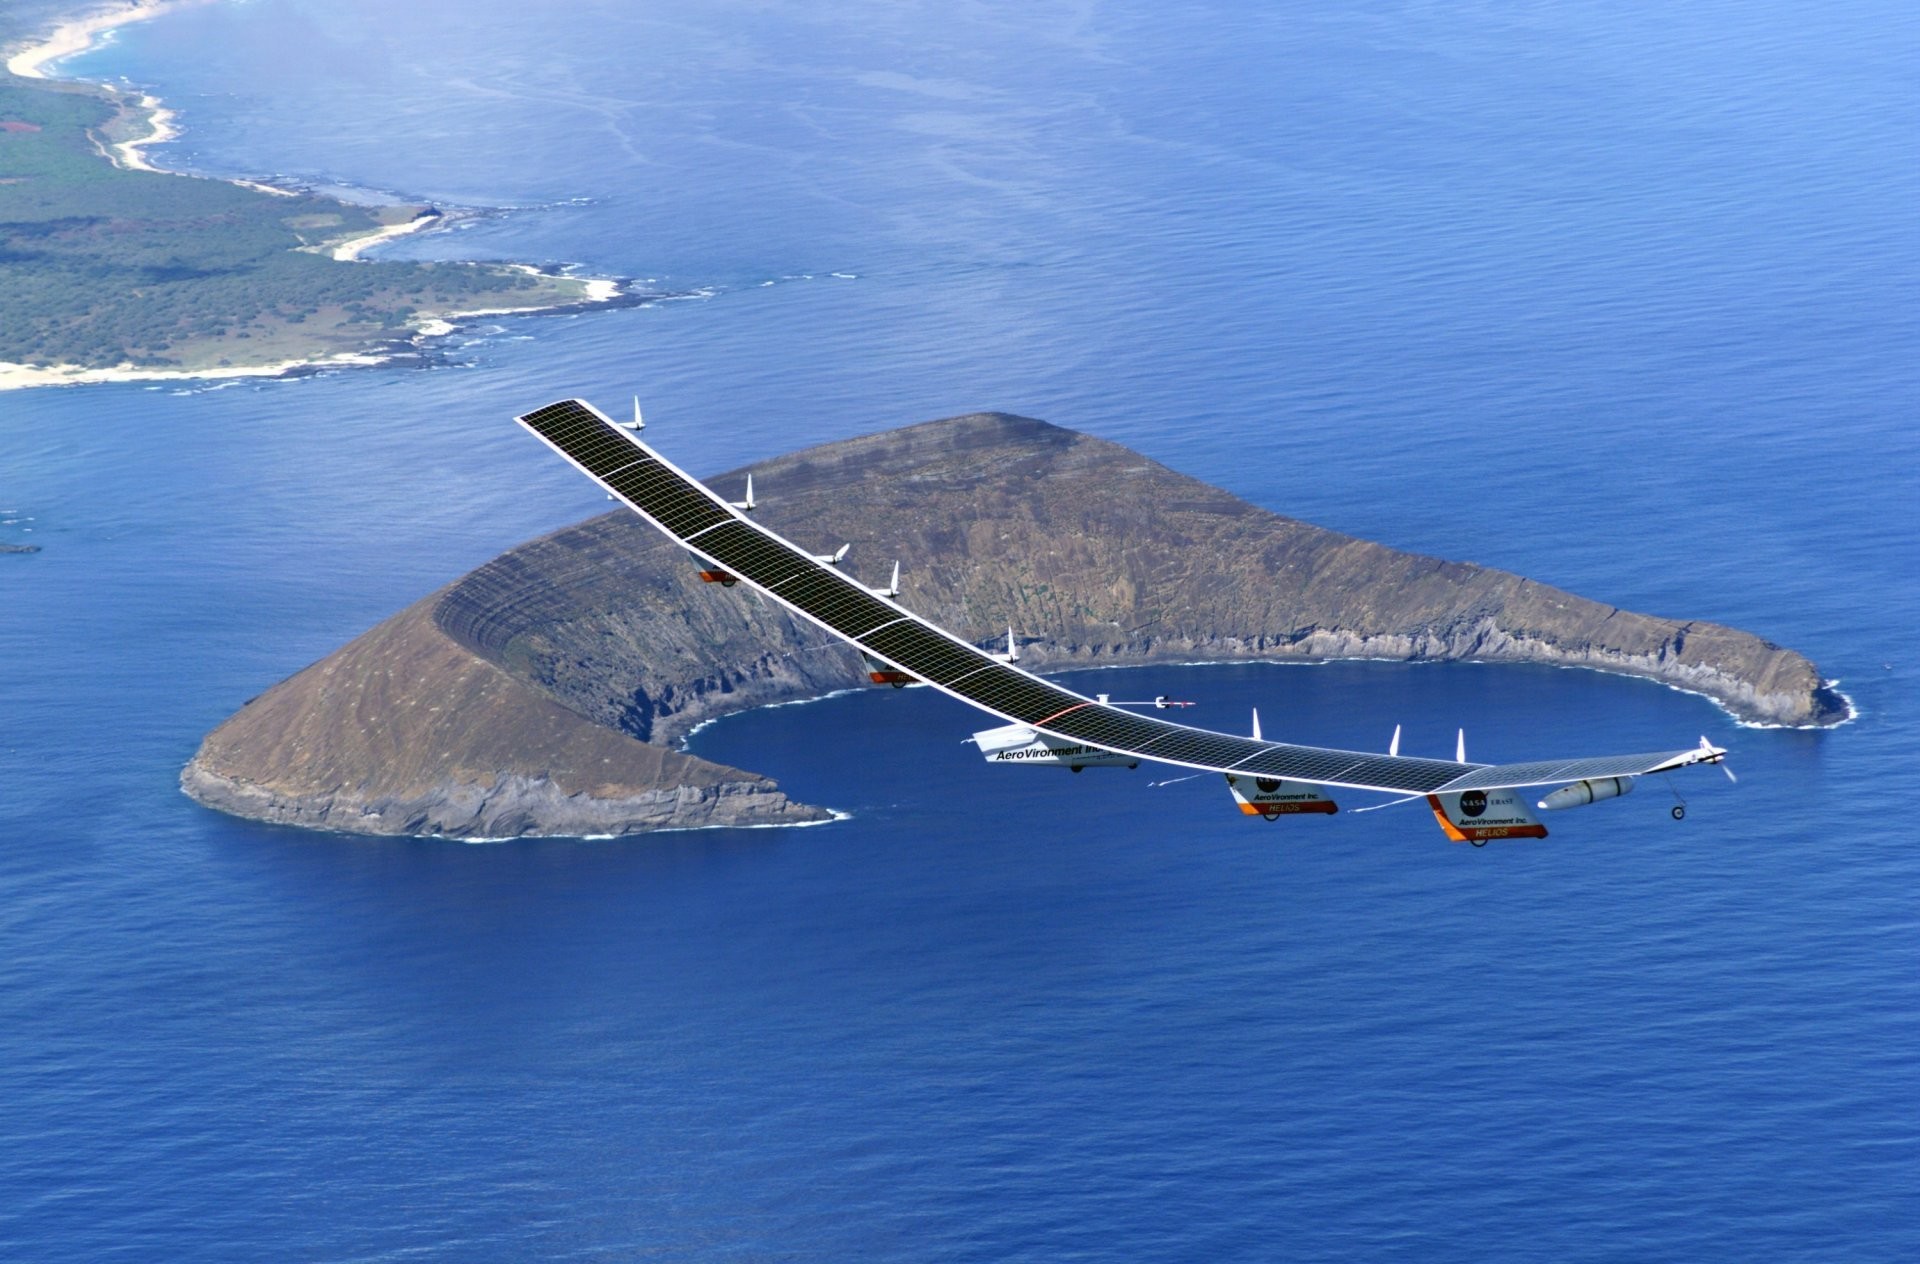 1920x1264 nasa pathfinder drone aircraft solar panels island mountain sea wallpaper